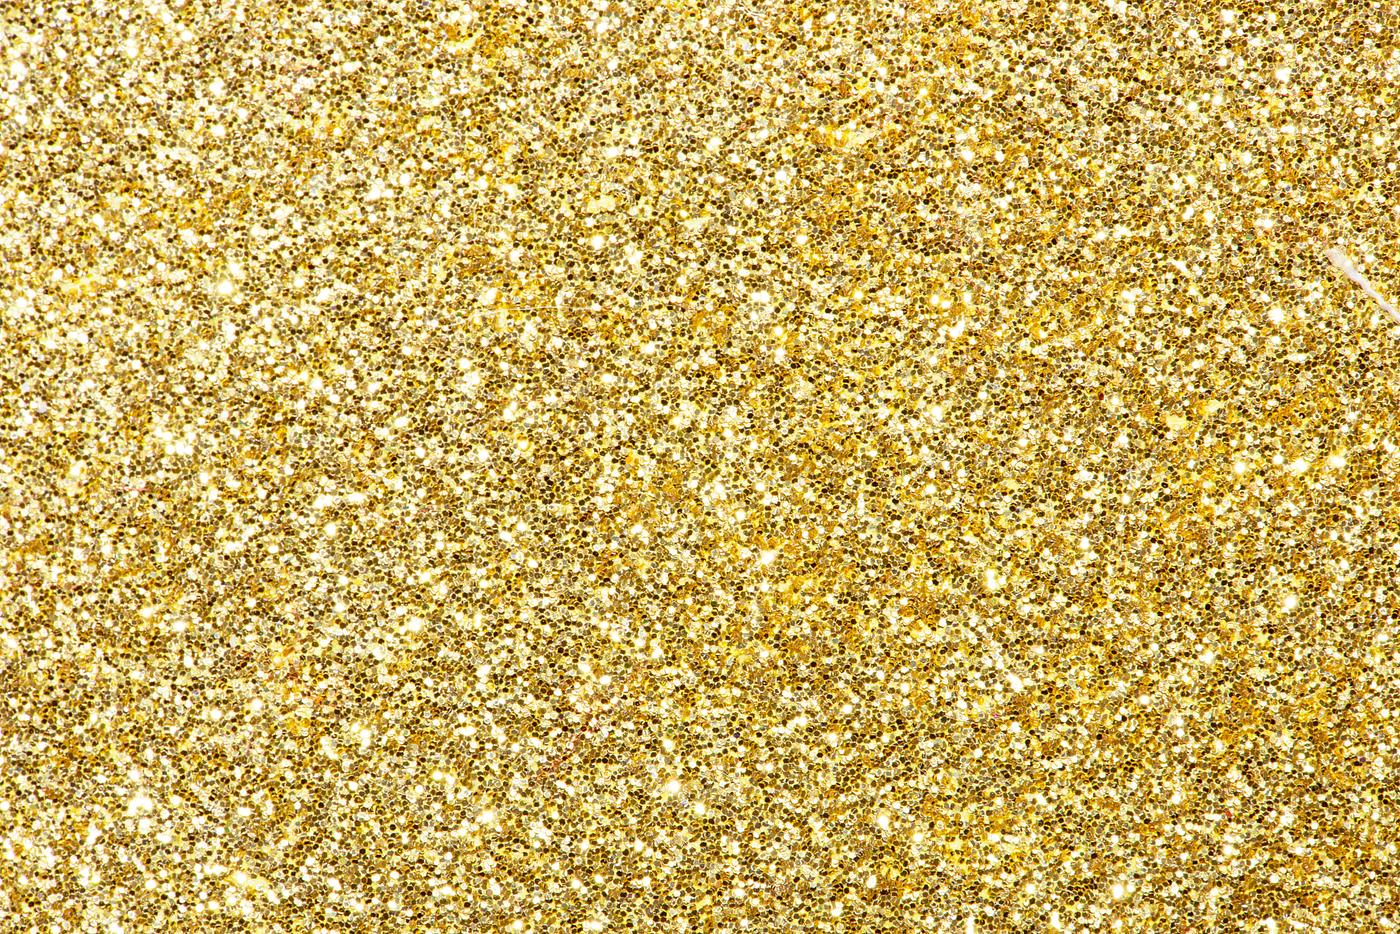 Gold Glitter Background Free Stock Photo 552600